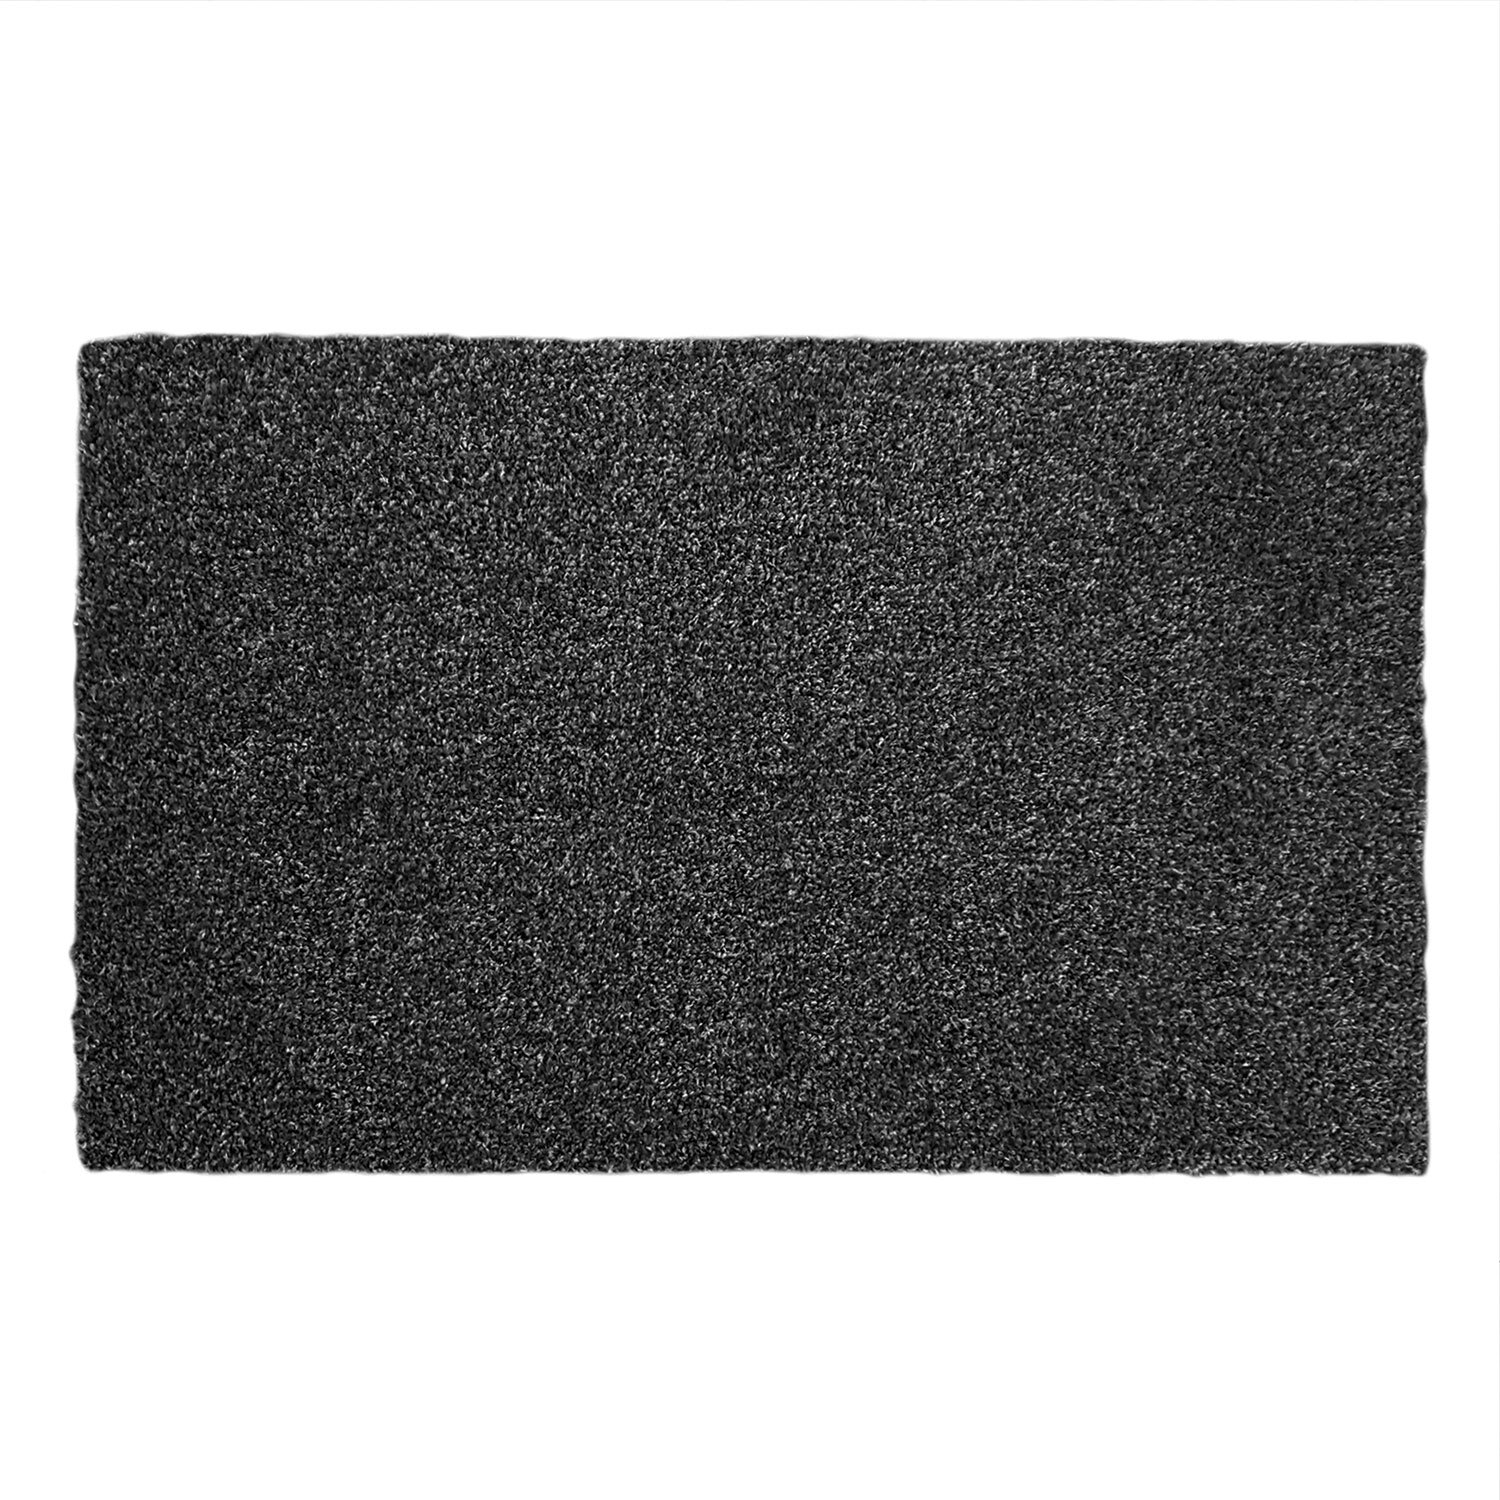 Single Primeur Mud Master Doormat 90 x 60cm in Assorted styles Image 5